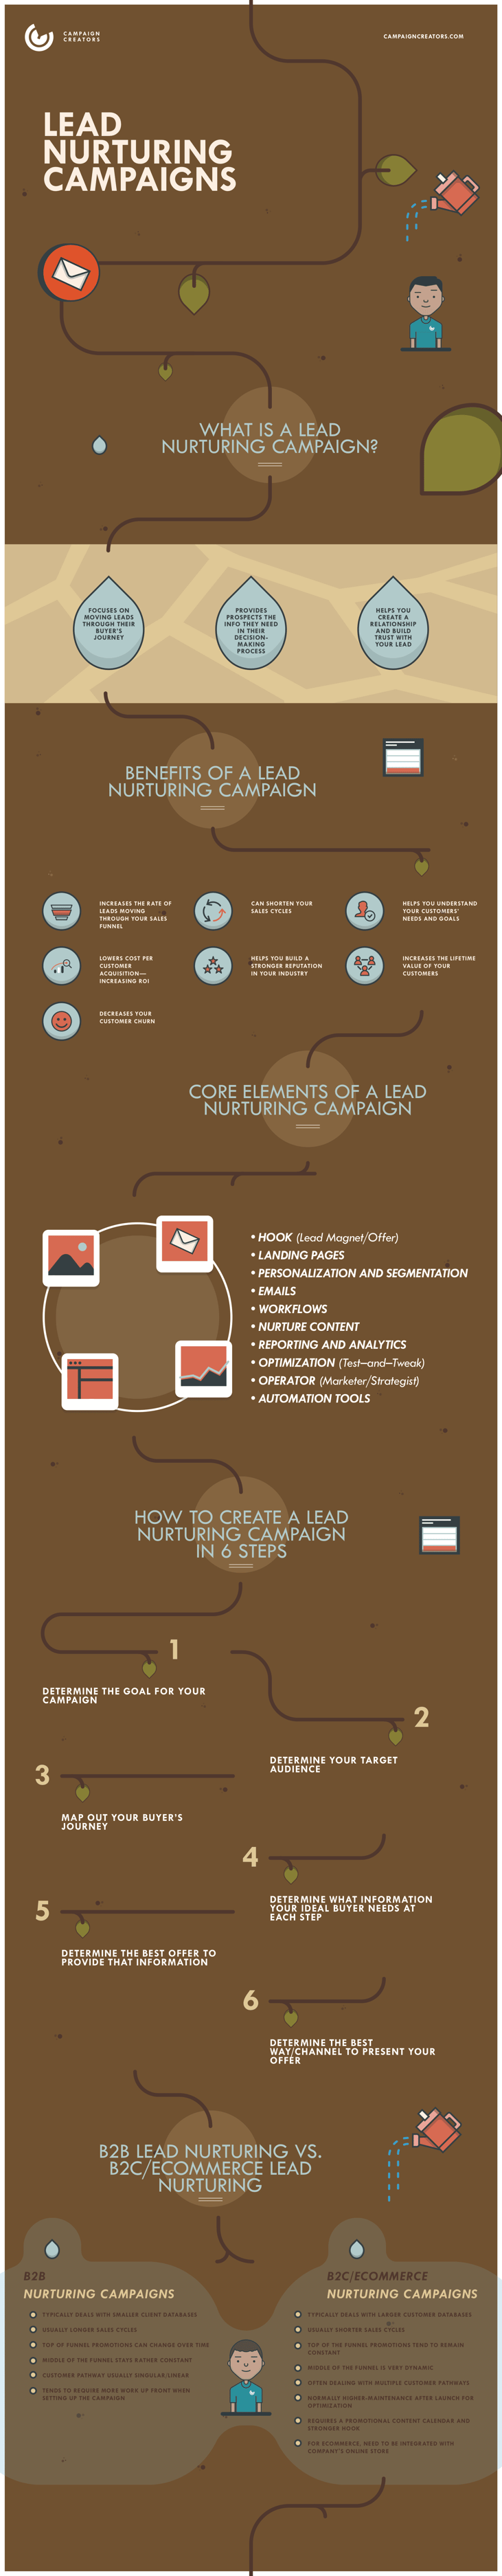 CC - Lead Nurturing Campaigns - Lesson 6 Infographic